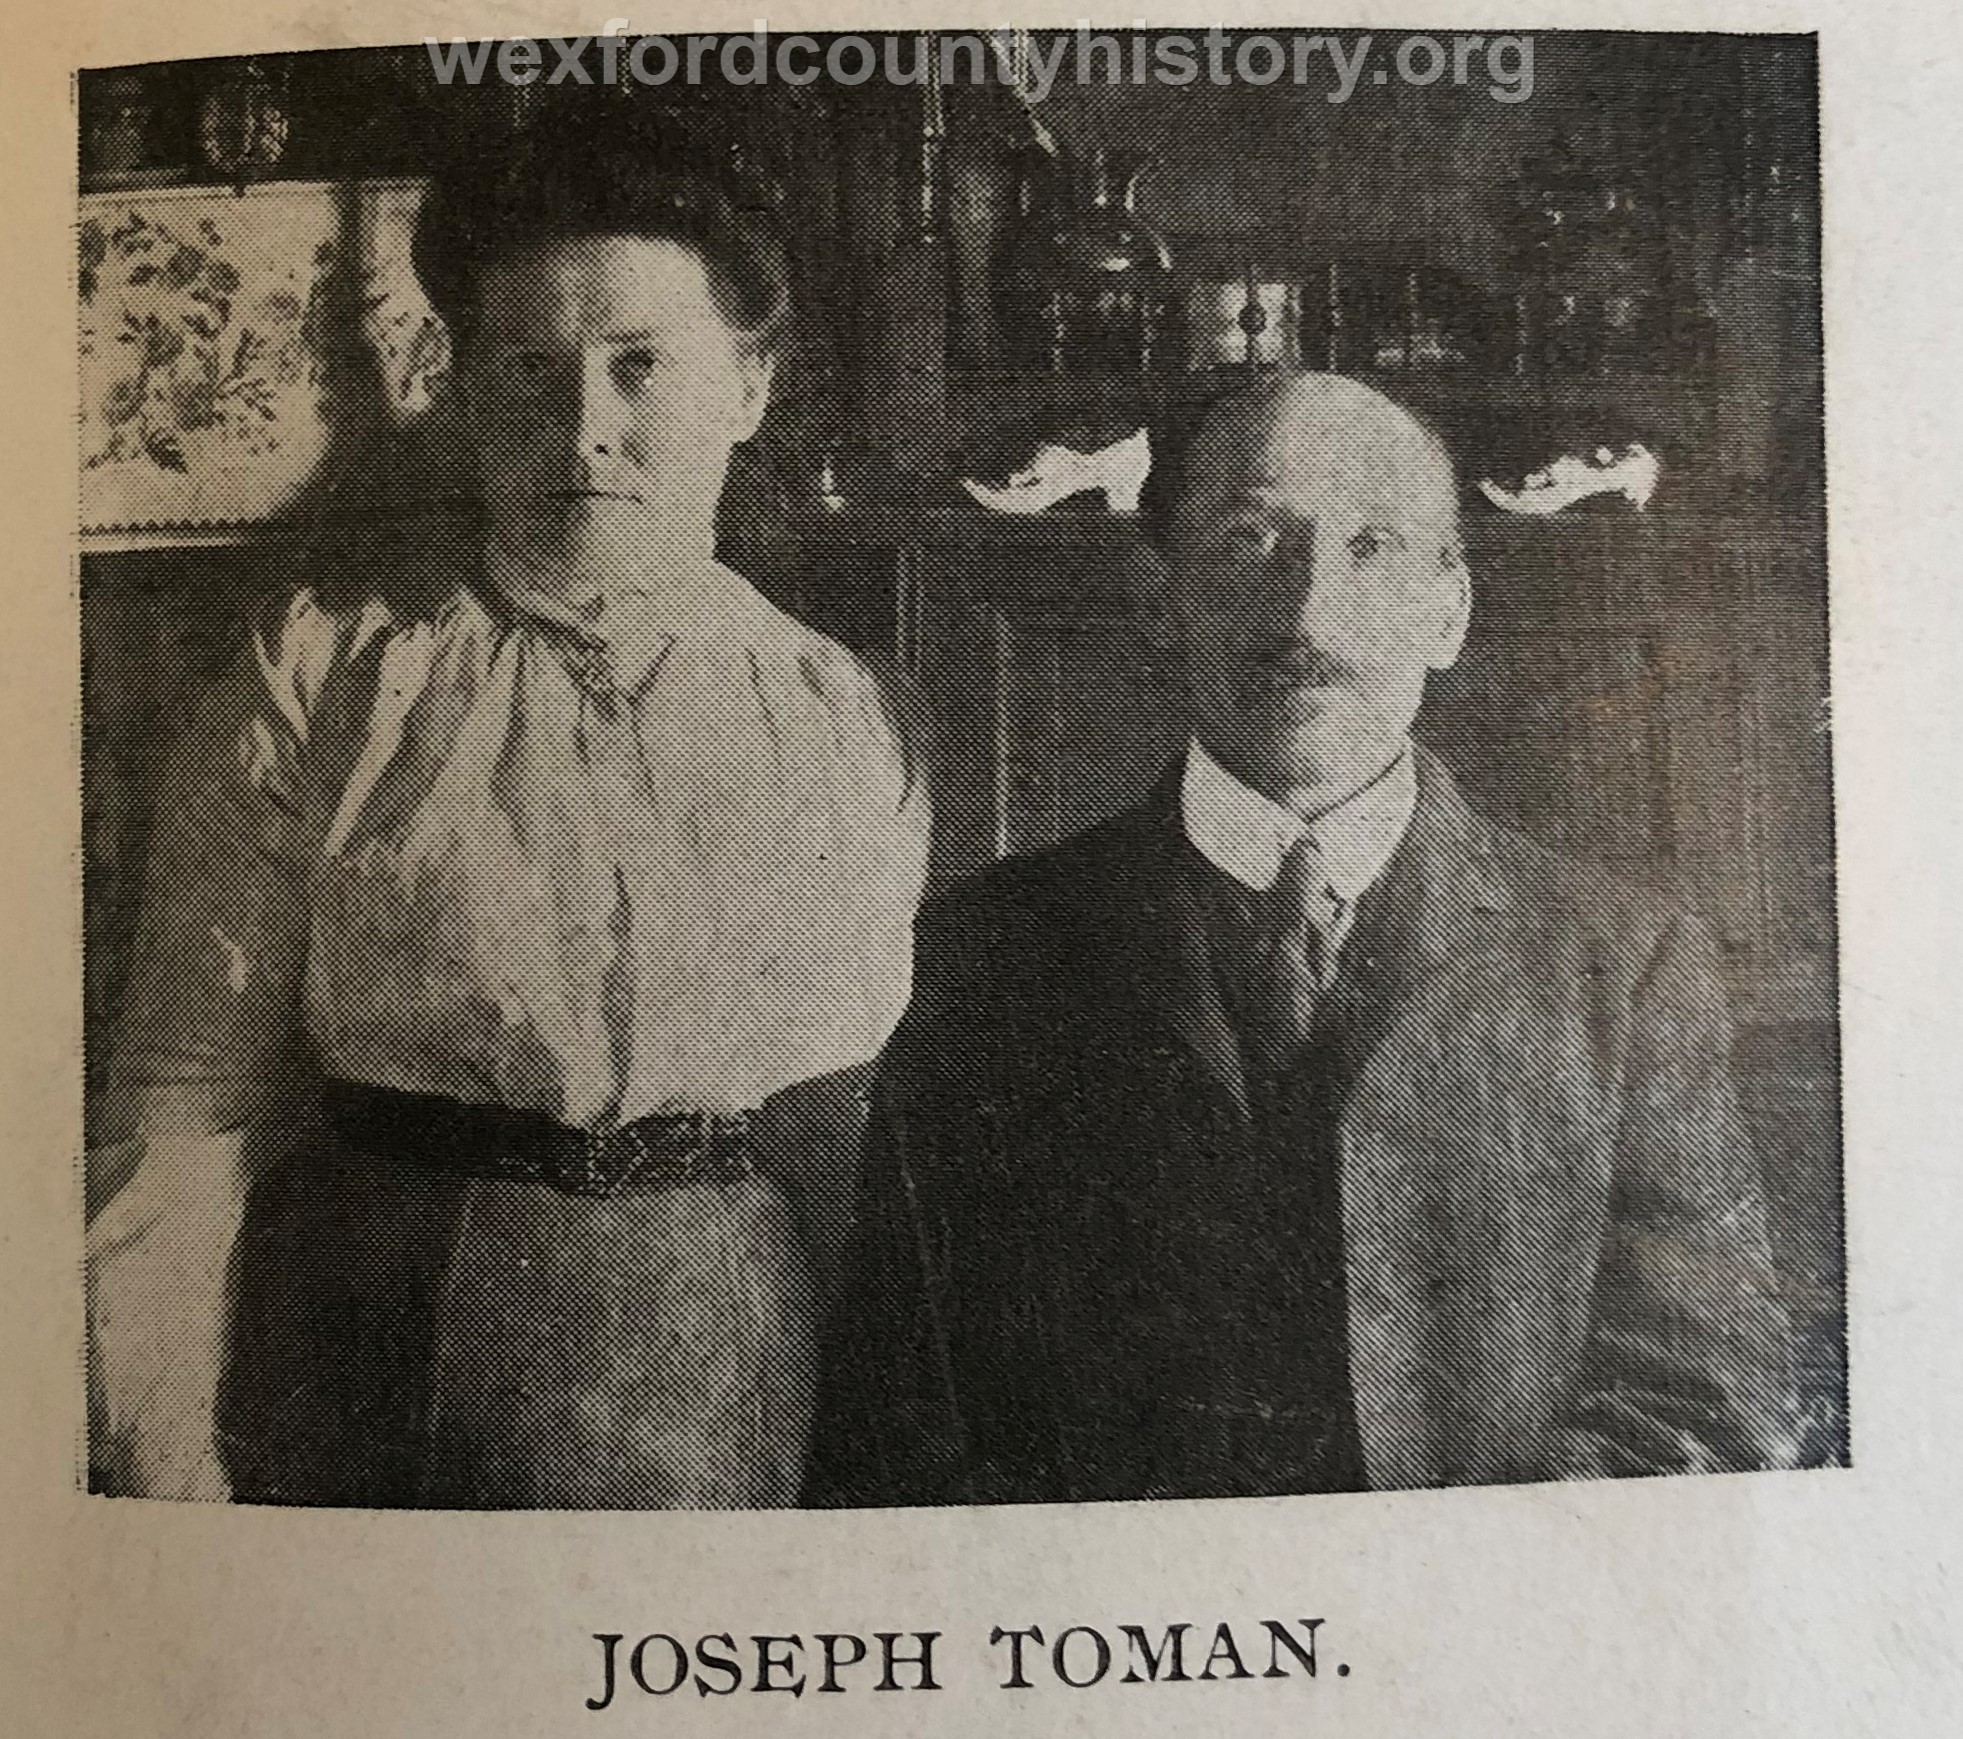 Joseph Toman